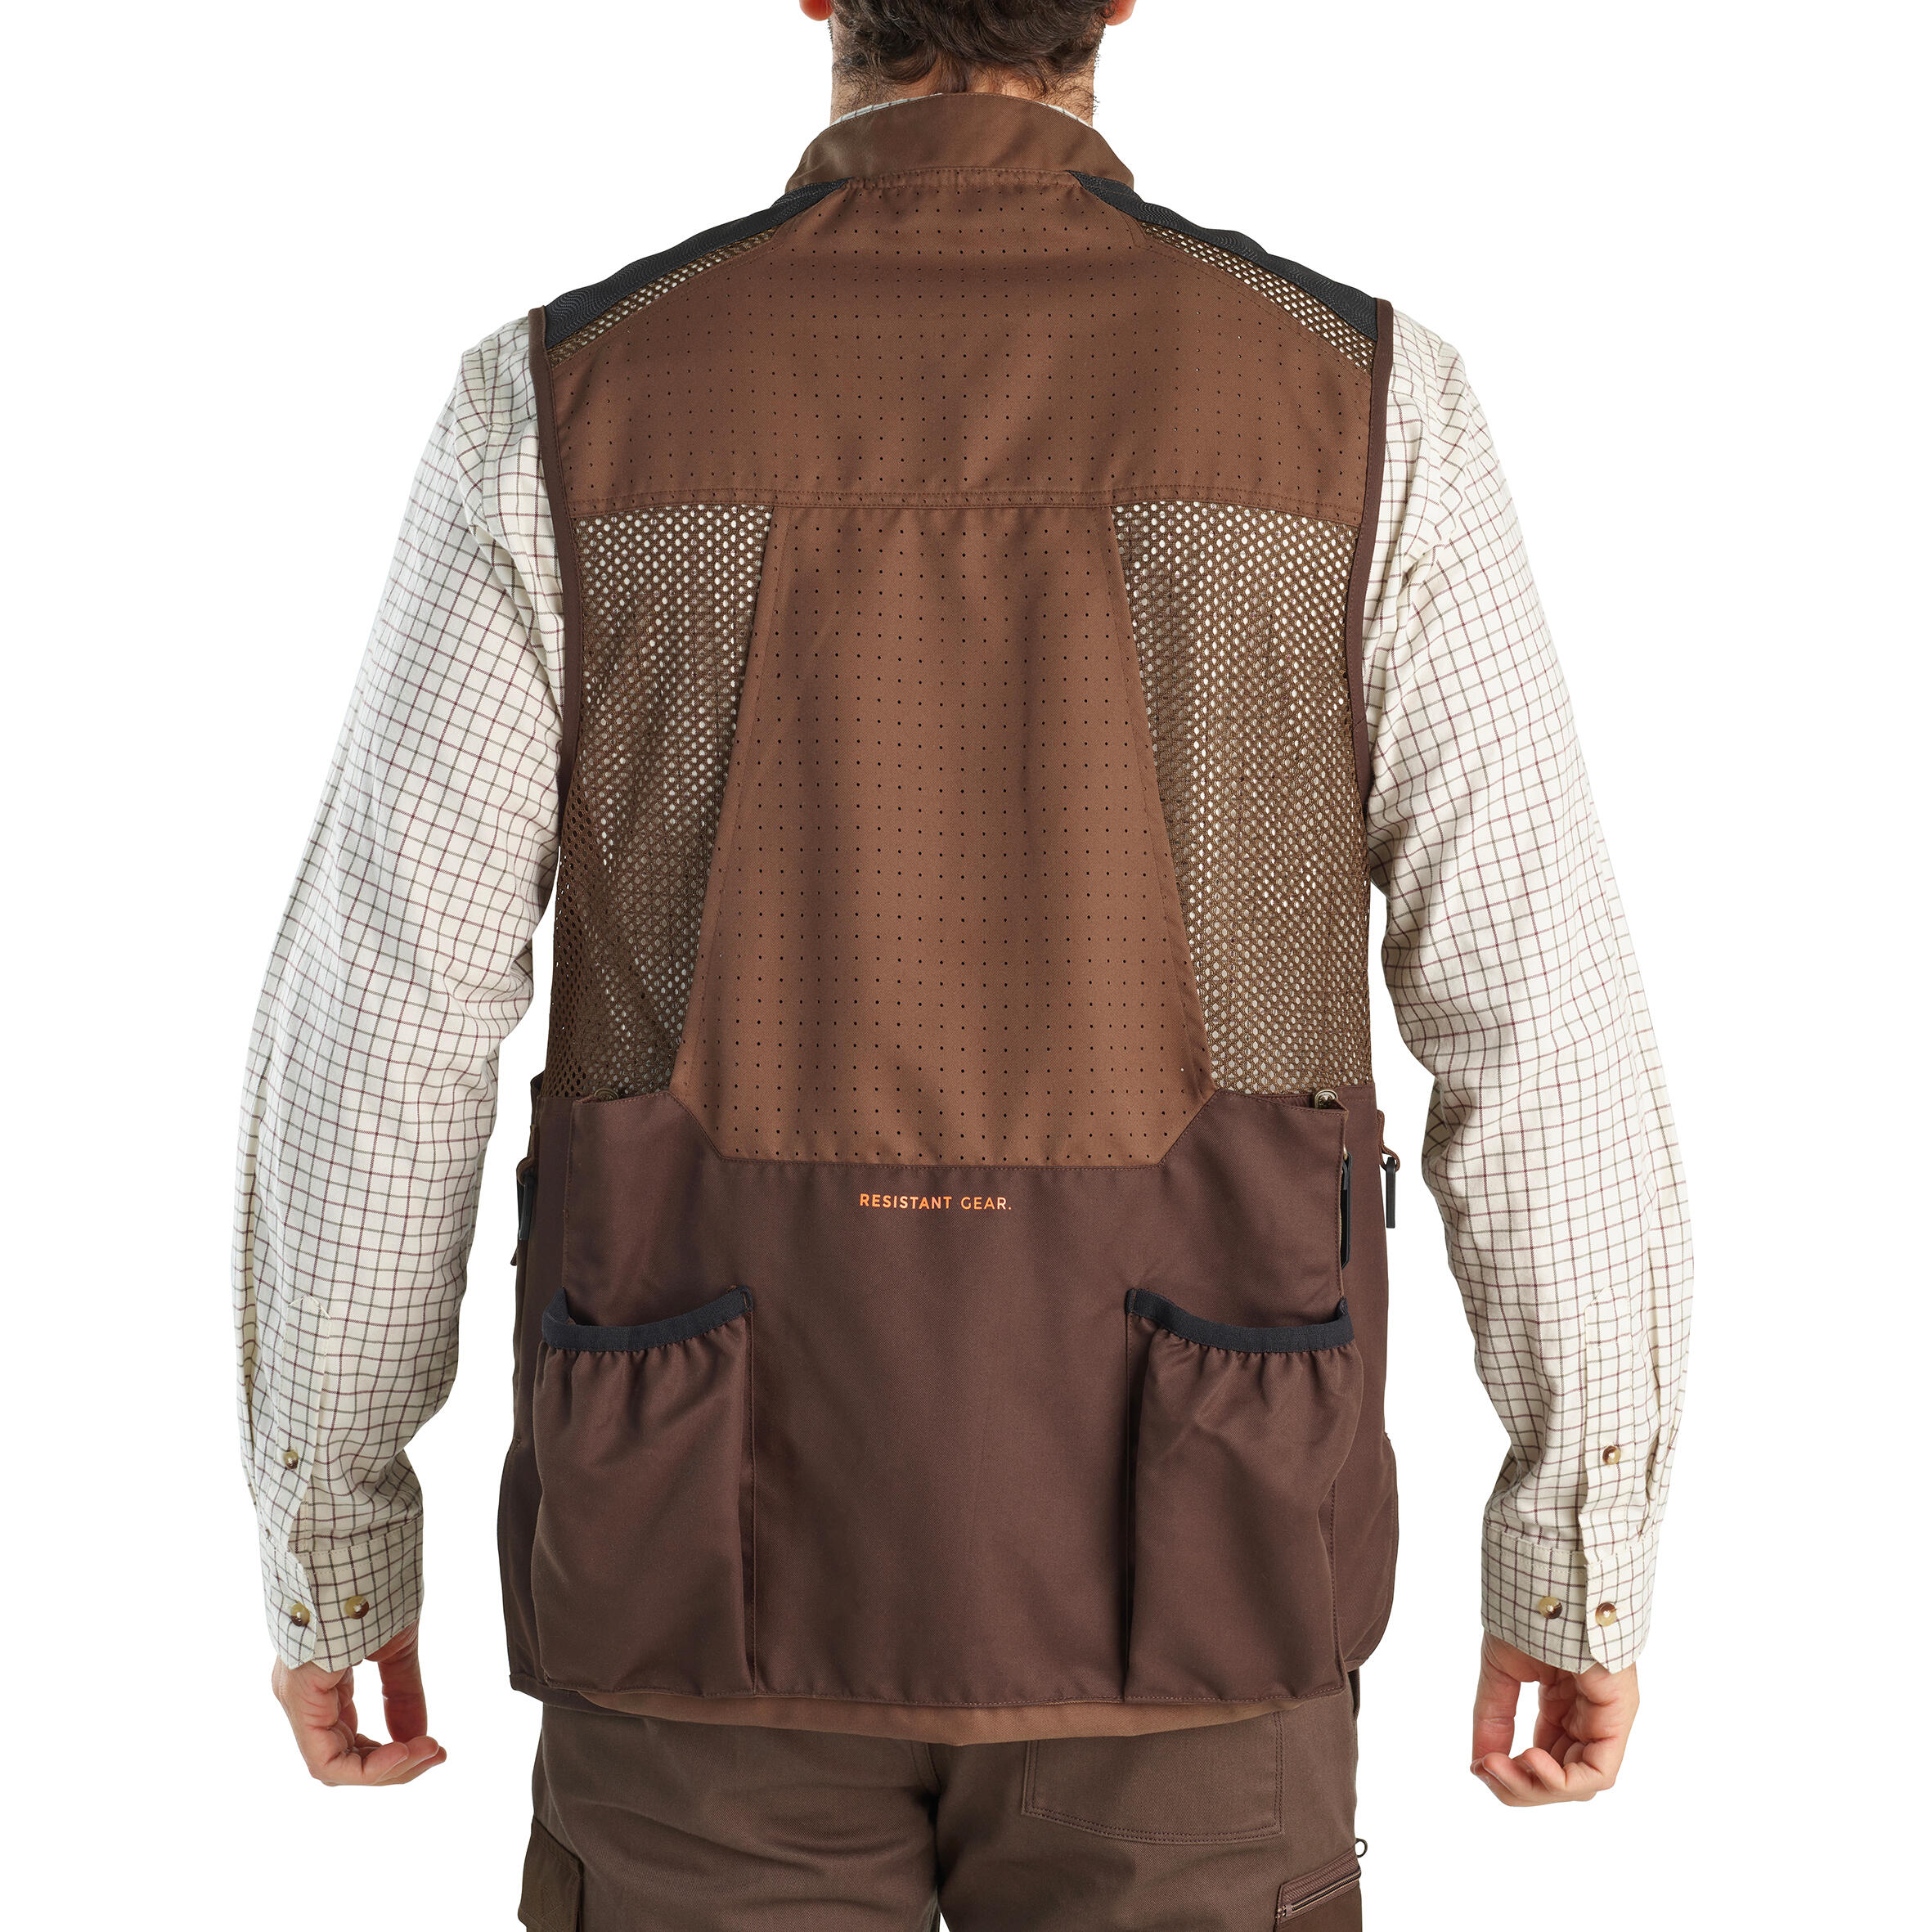 Men's Hunting Breathable Waistcoat - 520 brown V2 11/13